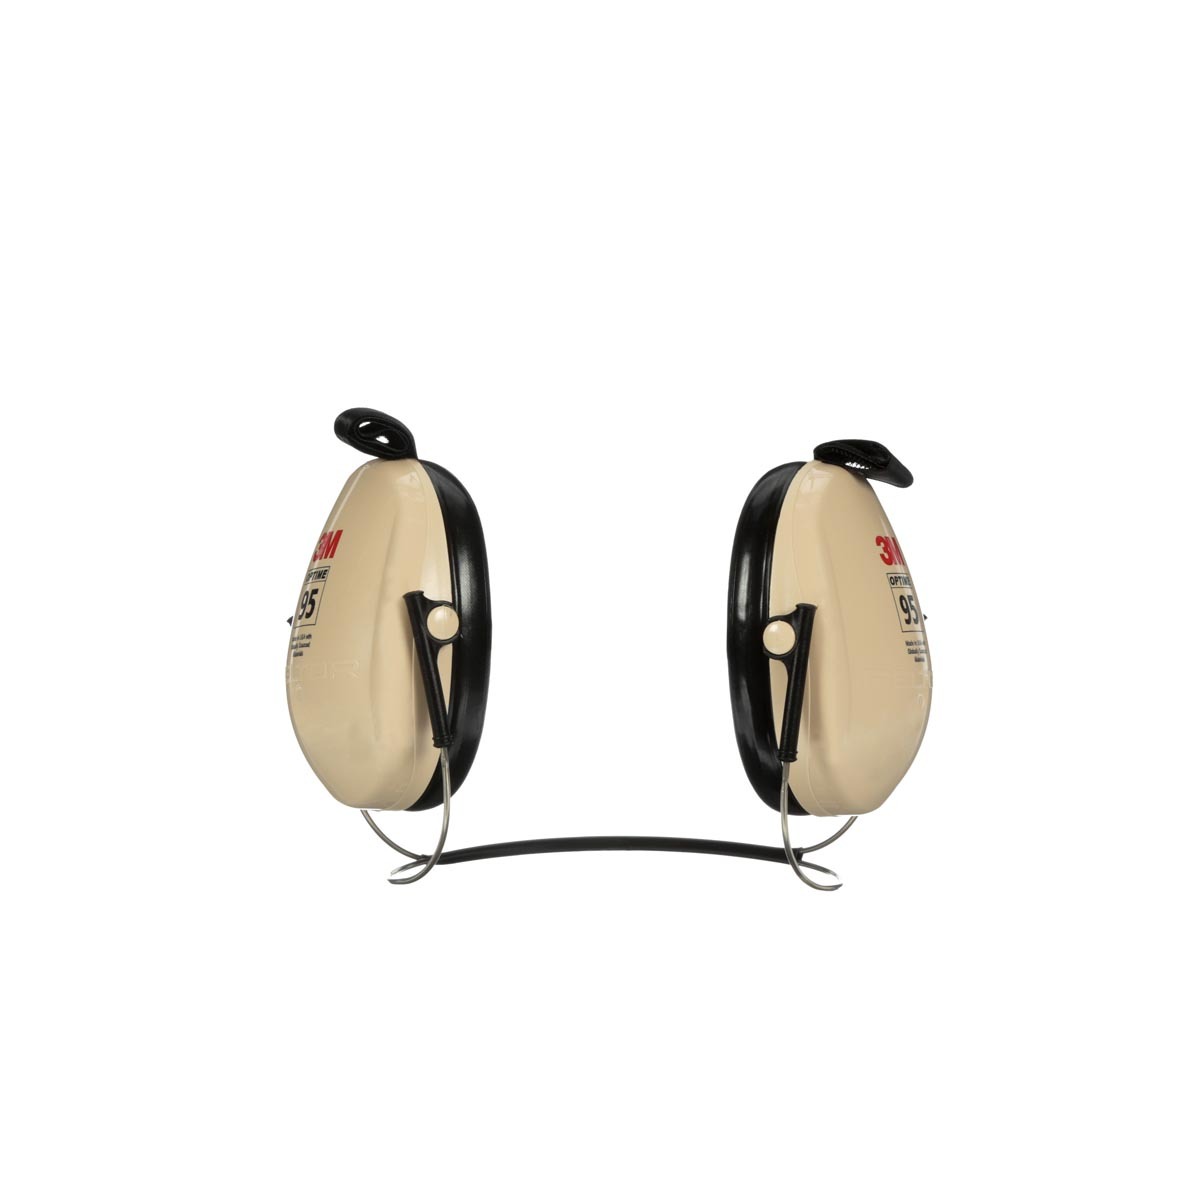 Airgas - 3MRX4P51E - 3M™ Peltor™ X4P51E Black Cap Mount Hearing